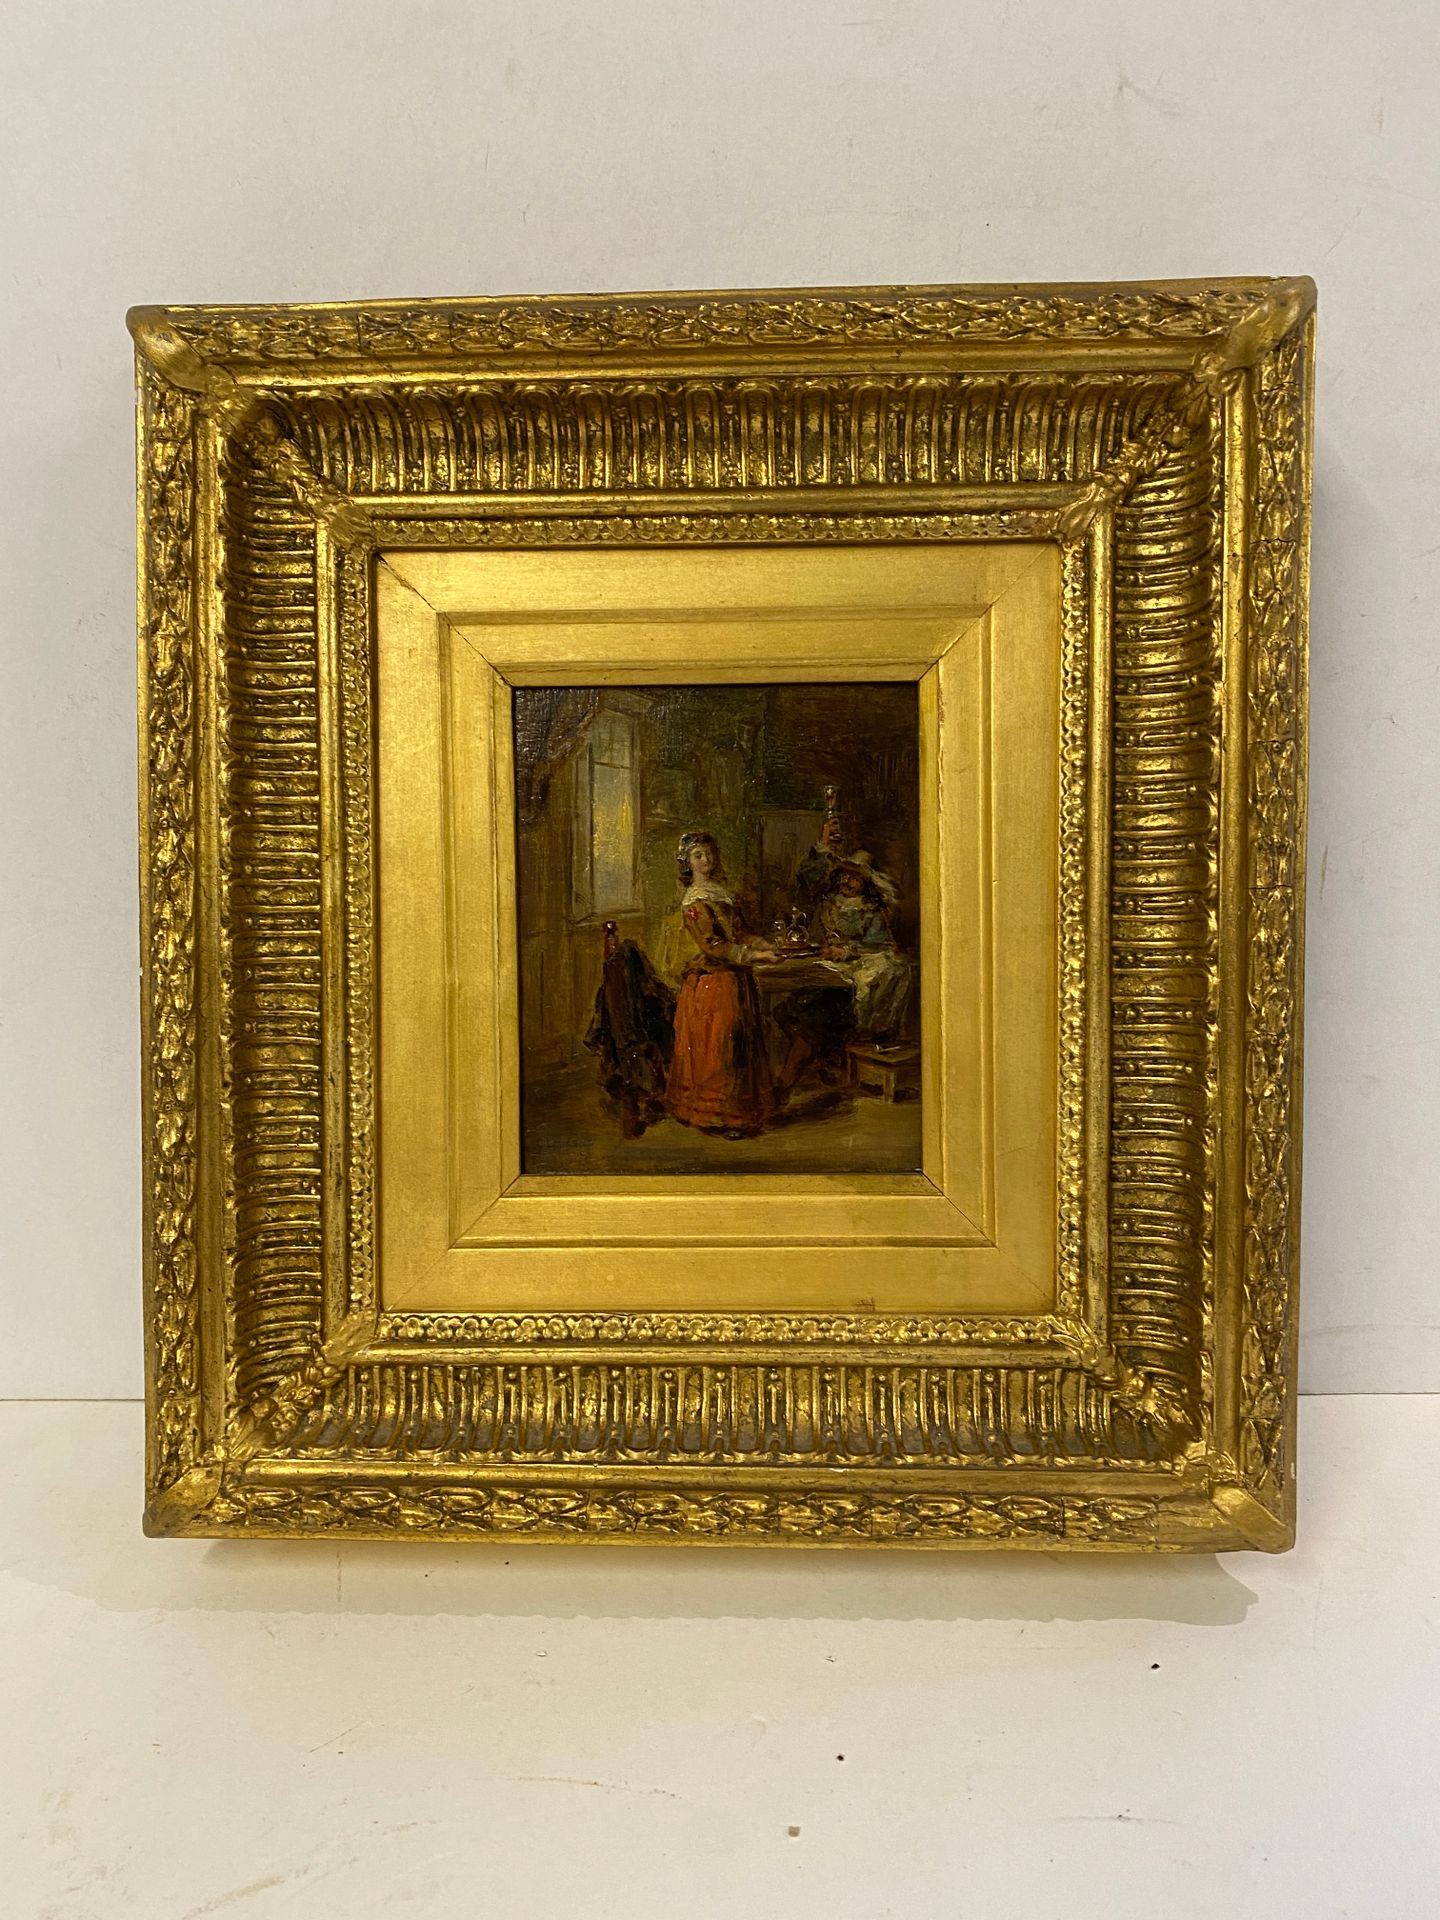 Null Charles LANDSEER (1799-1879)

The lunch

Oil on panel, signed lower left.

&hellip;